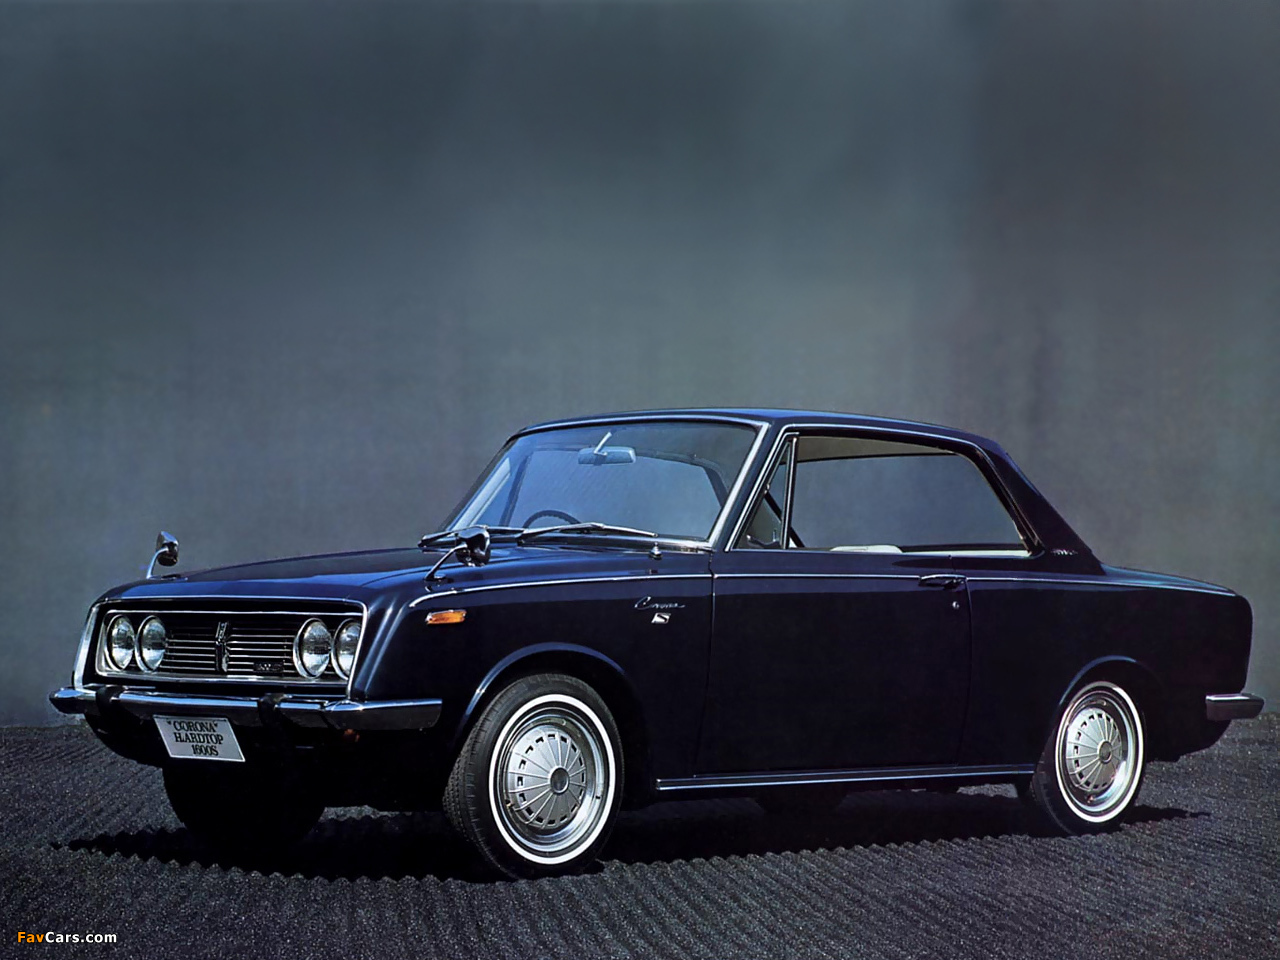 1965 Toyota Corona front view